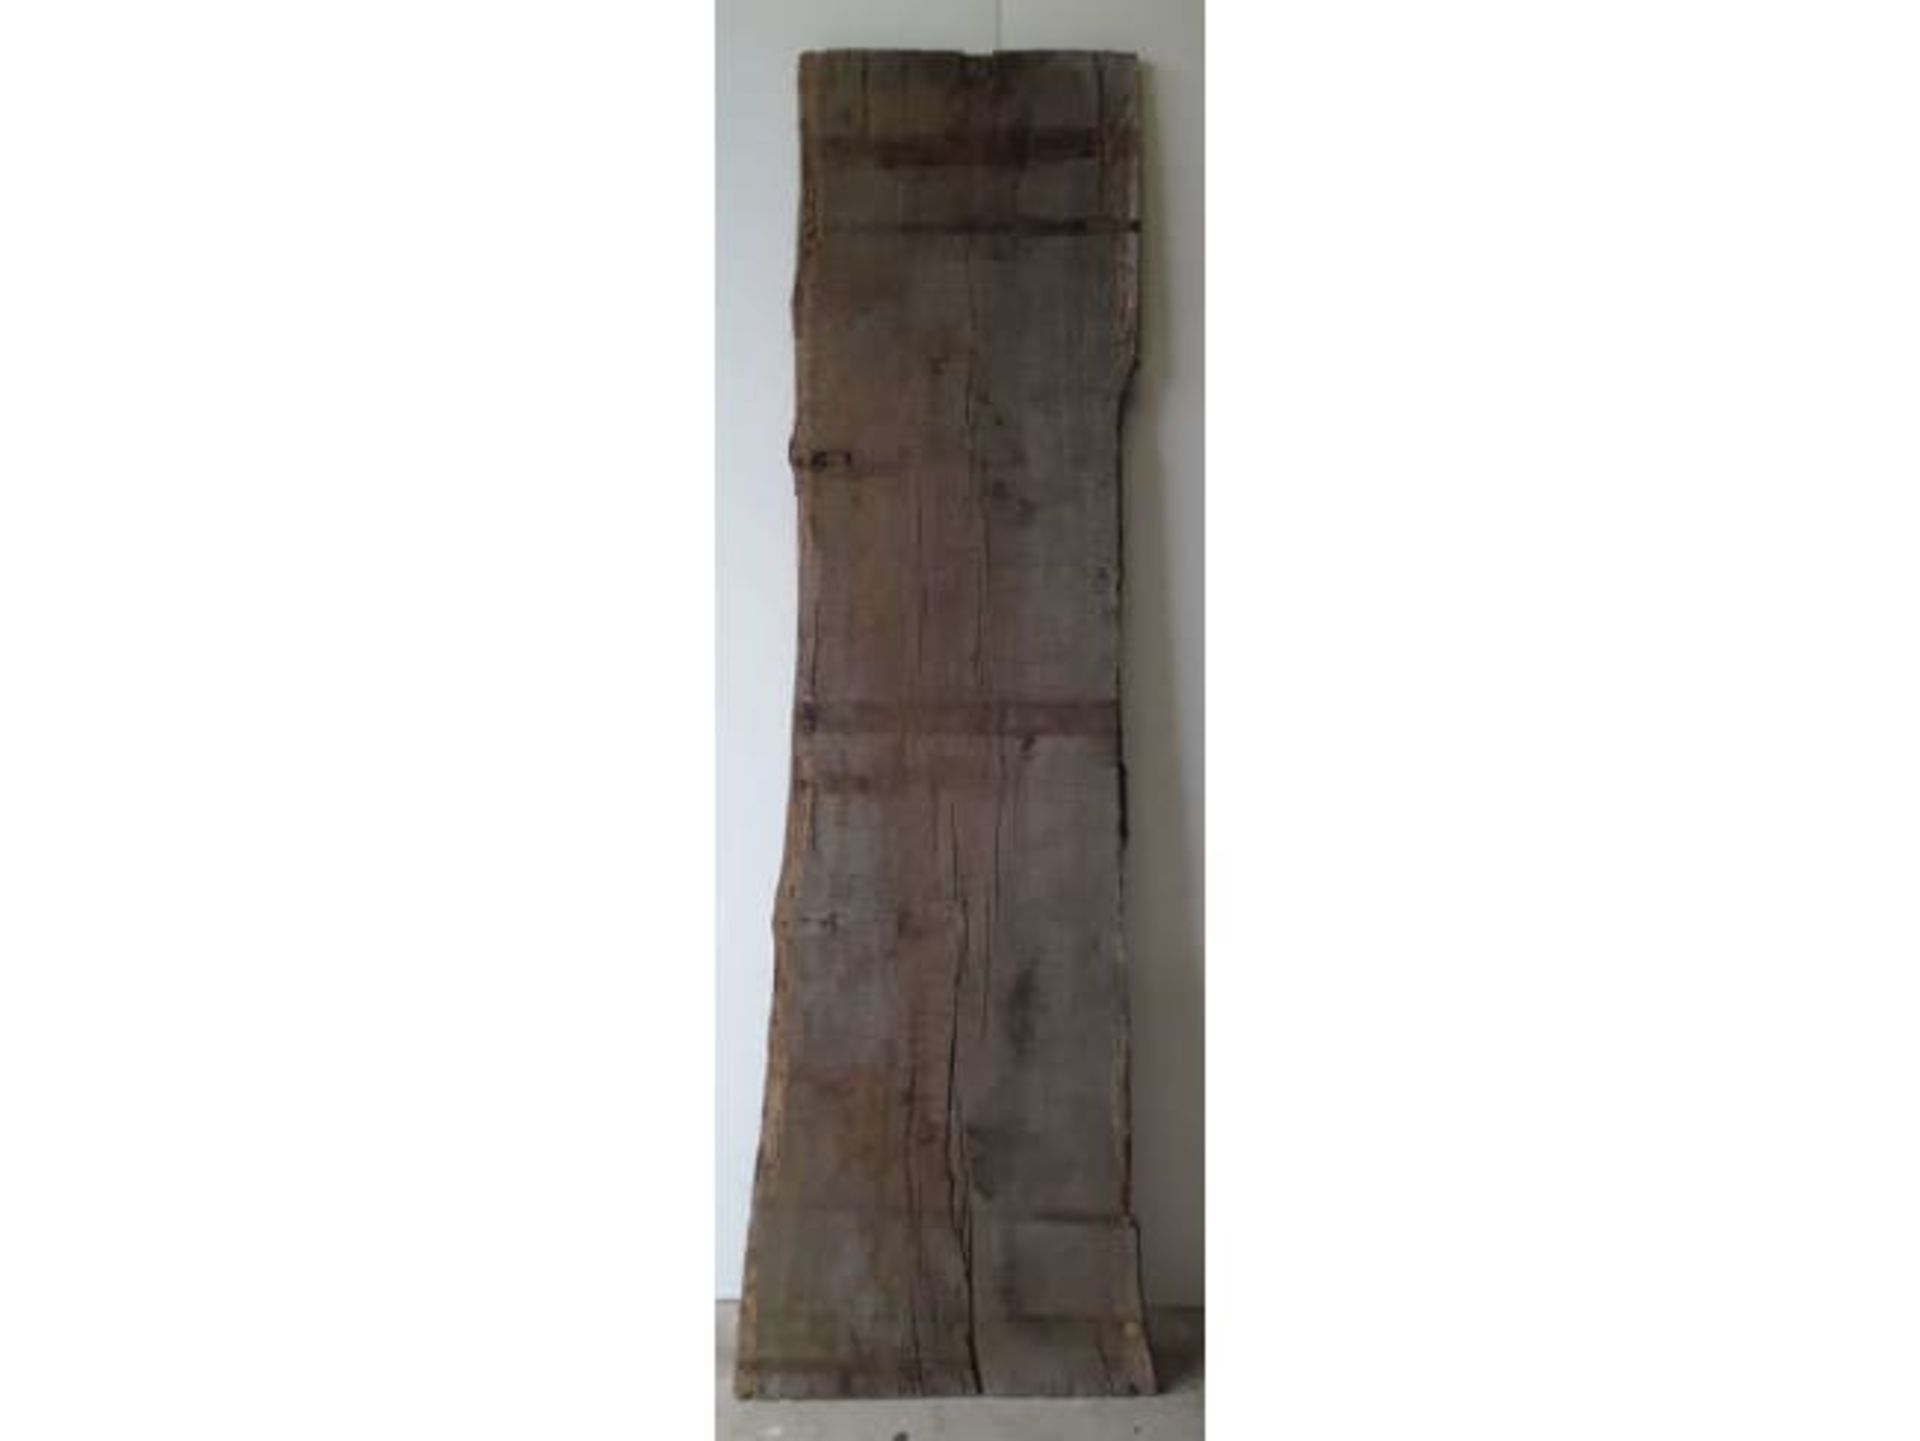 1 x Hardwood Air Dried Sawn Timber Waney Edge / Live Edge English Oak Board / Plank - Image 2 of 5